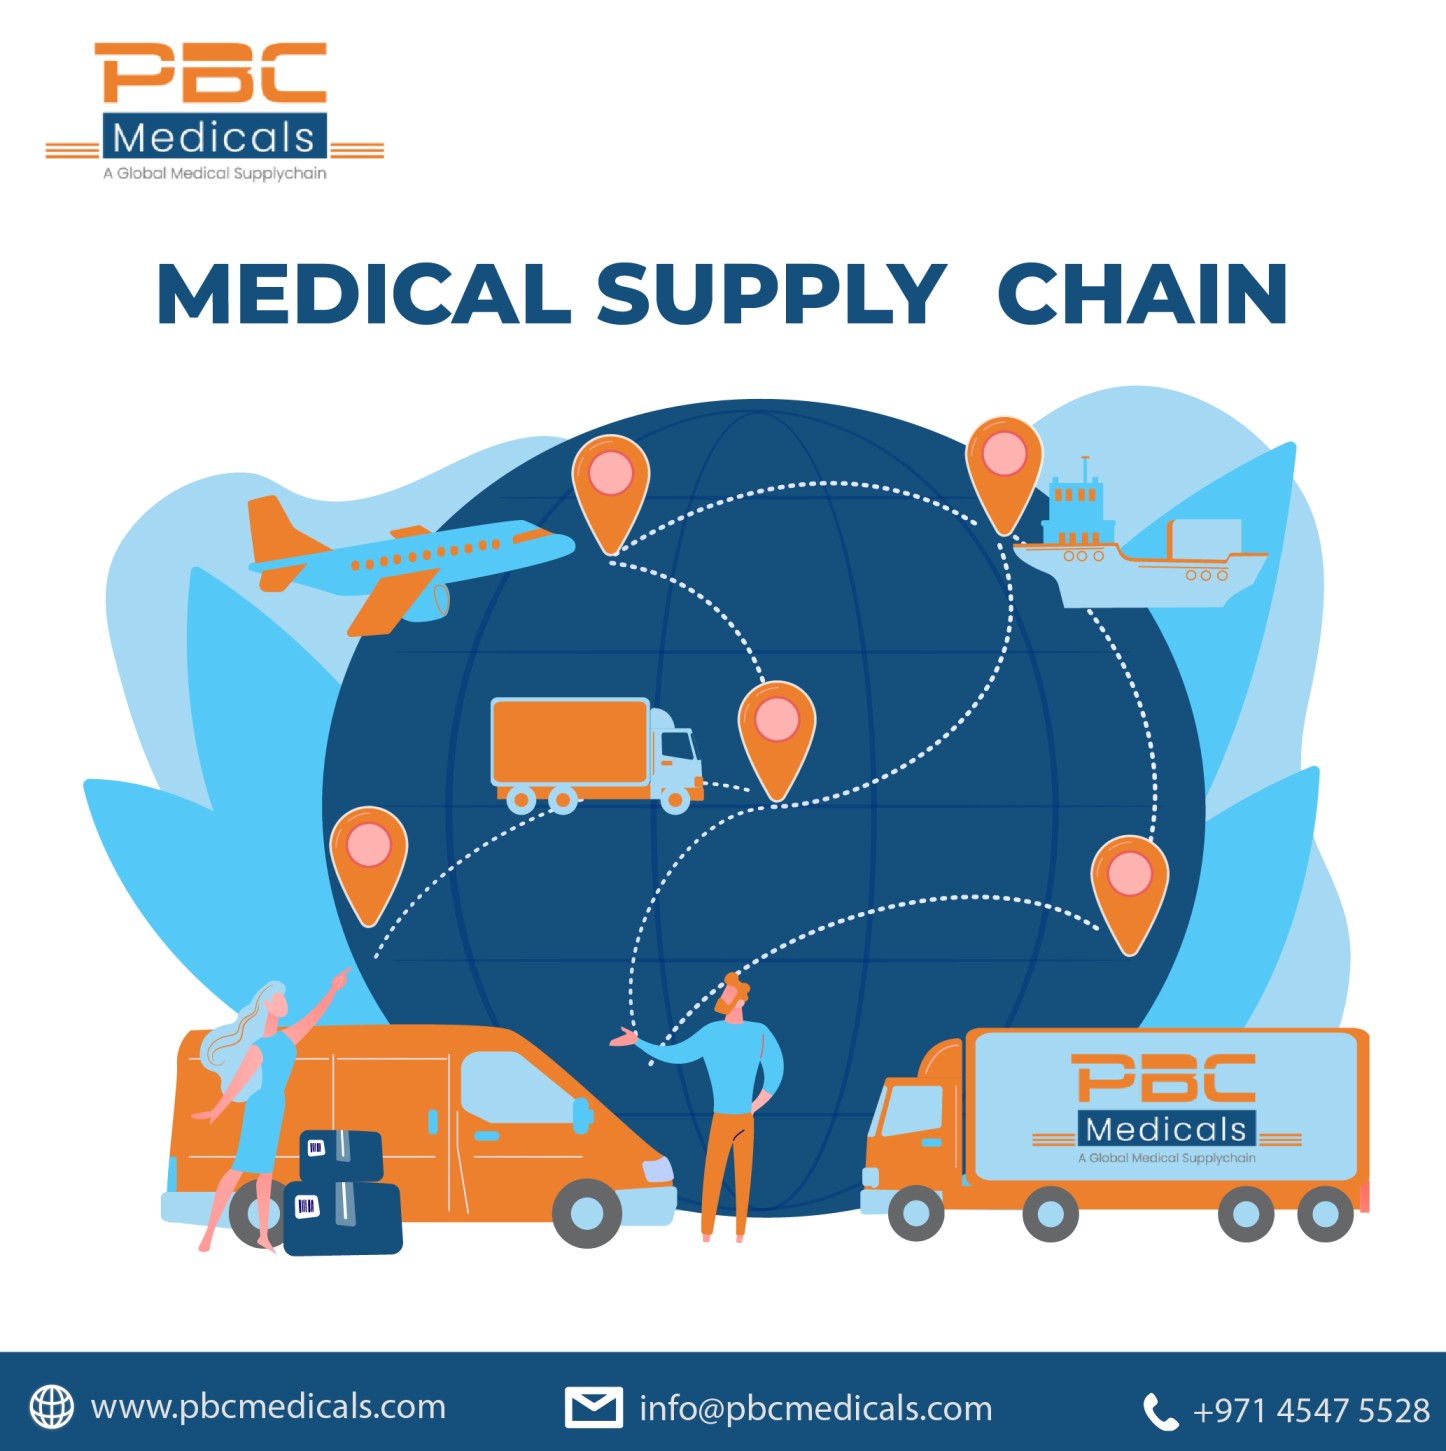 Medical Supply Chain - PBC Medicals 